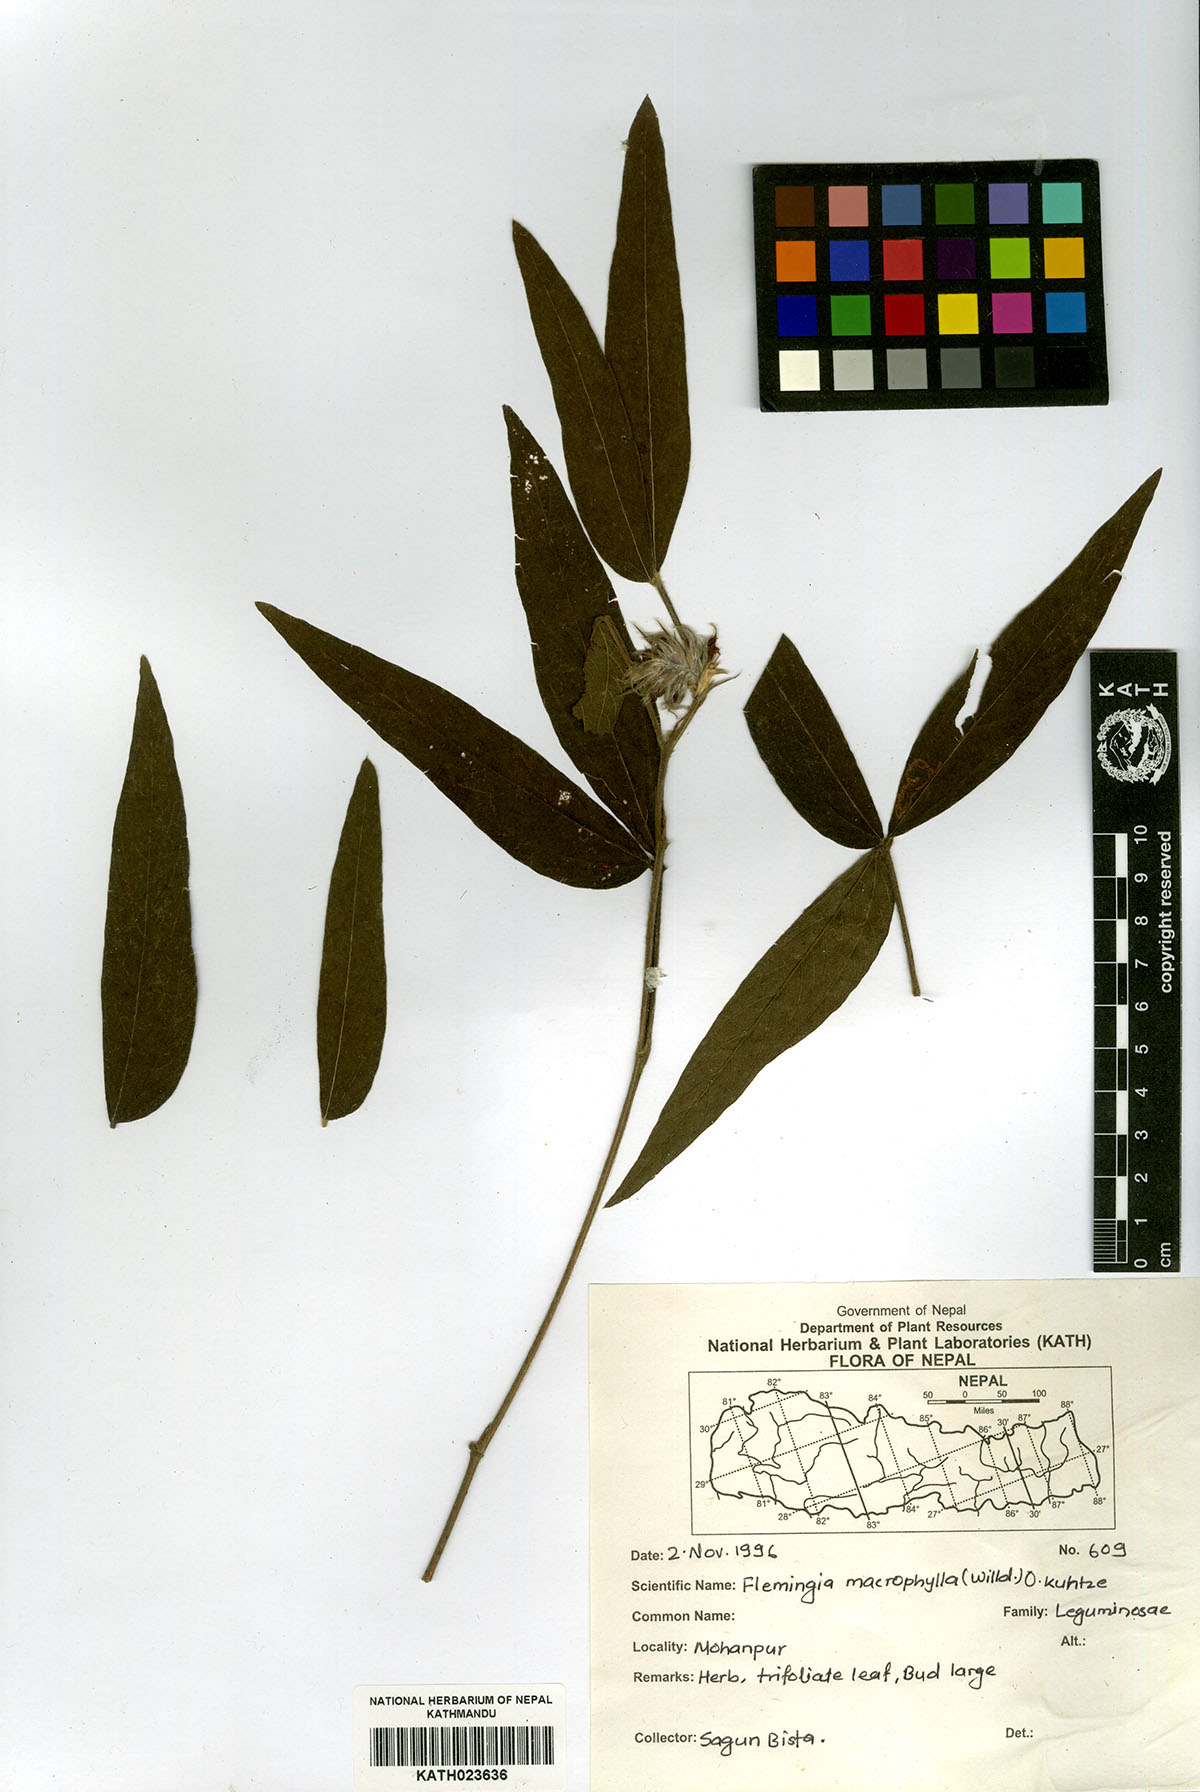 Flemingia macrophylla (Willd.) O.Kuntze